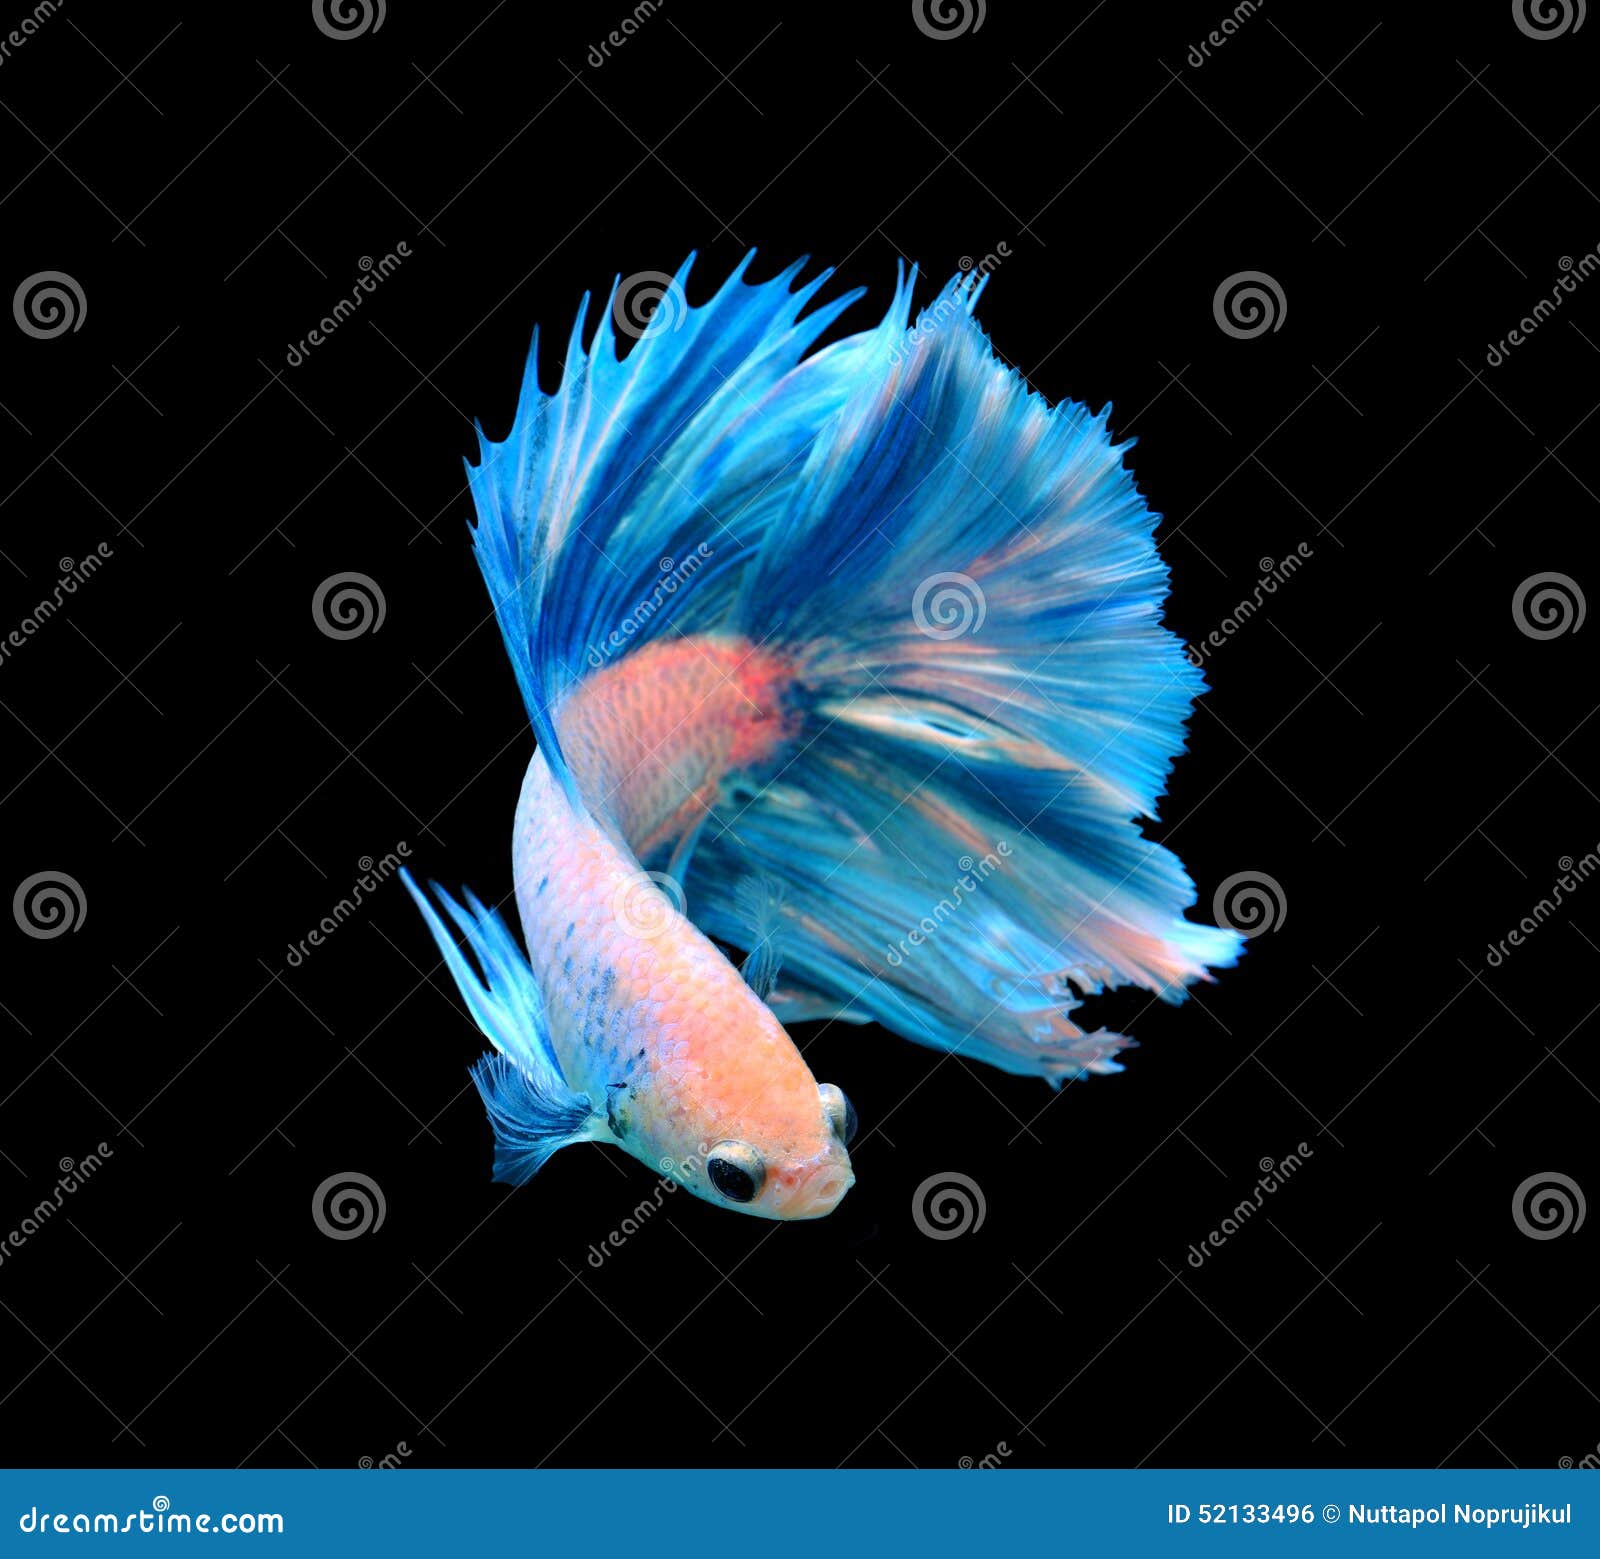 white and blue siamese fighting fish, betta fish  on bla